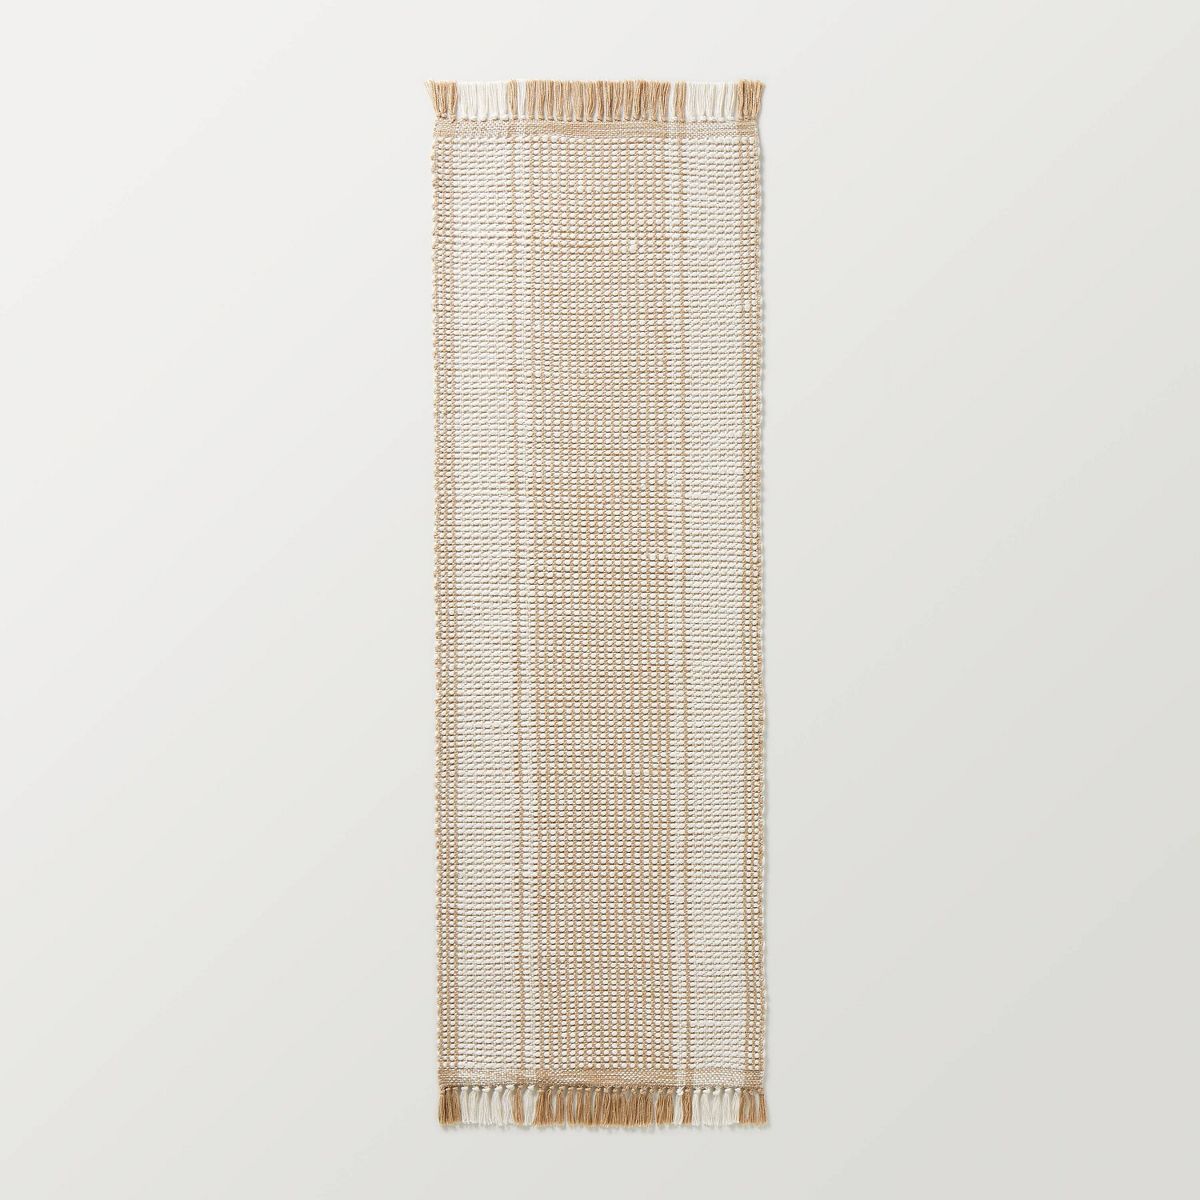 Wide Border Stripe Handmade Woven Area Rug Tan/Cream - Hearth & Hand™ with Magnolia | Target